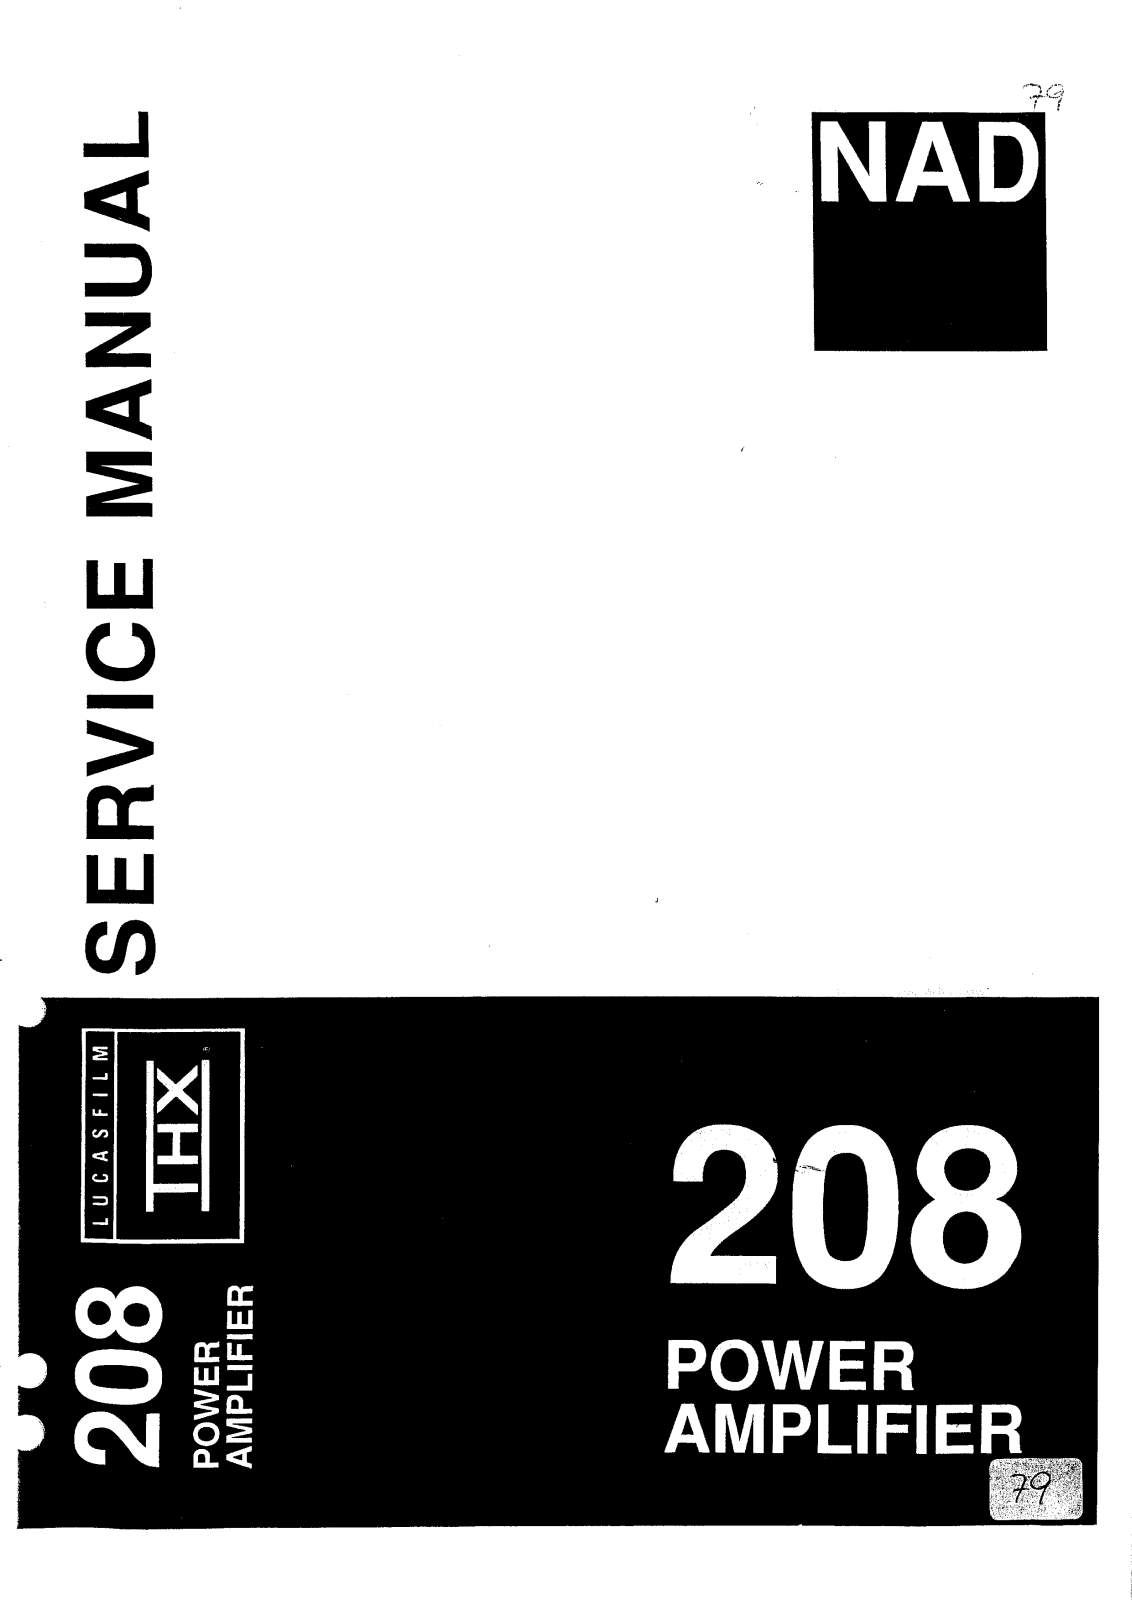 NAD 208 Service manual